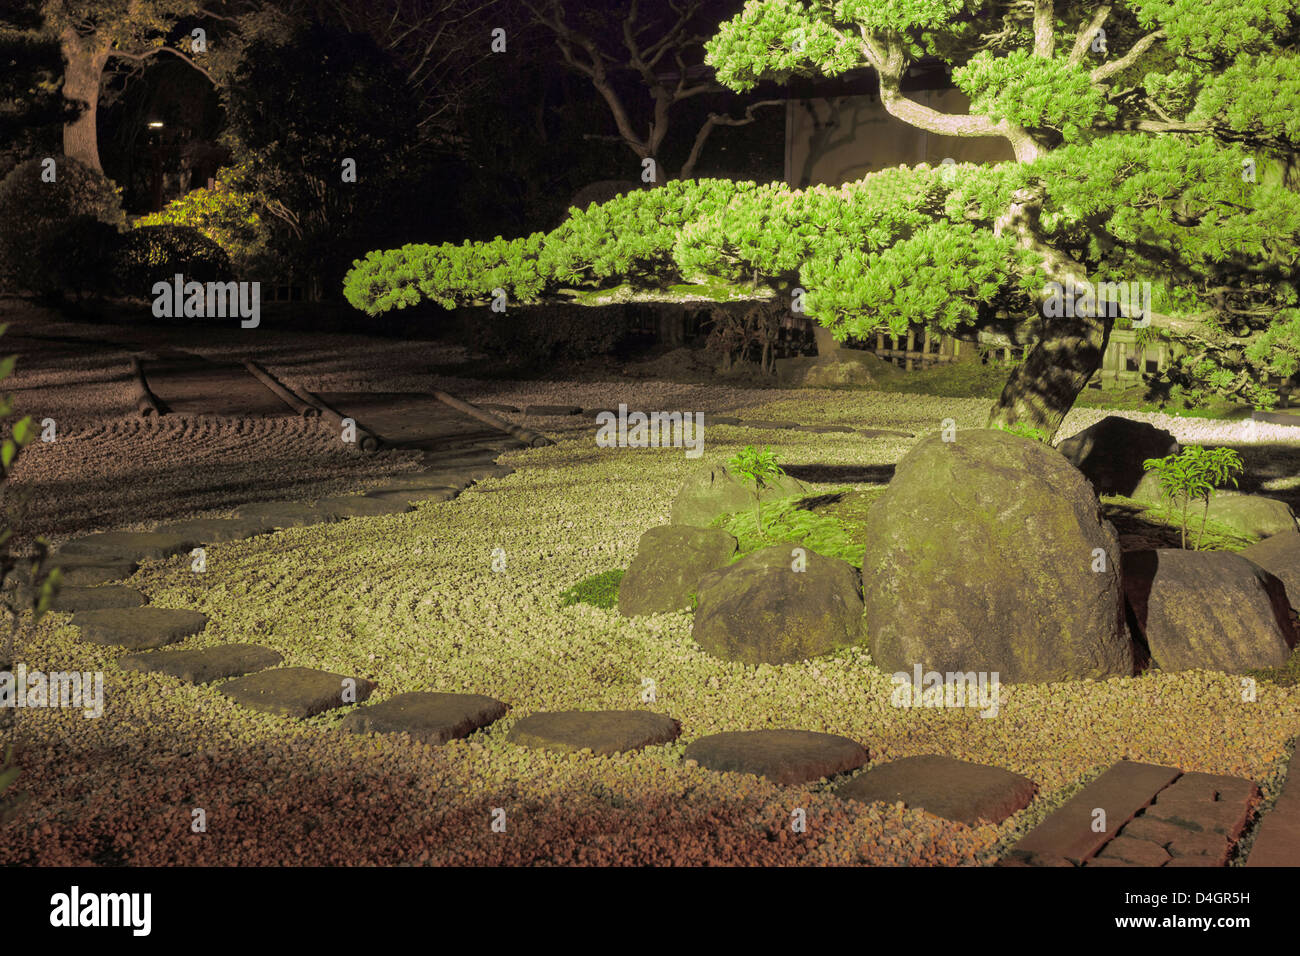 pine tree inside Japanese zen garden with stone way around and scenic night illumination Stock Photo